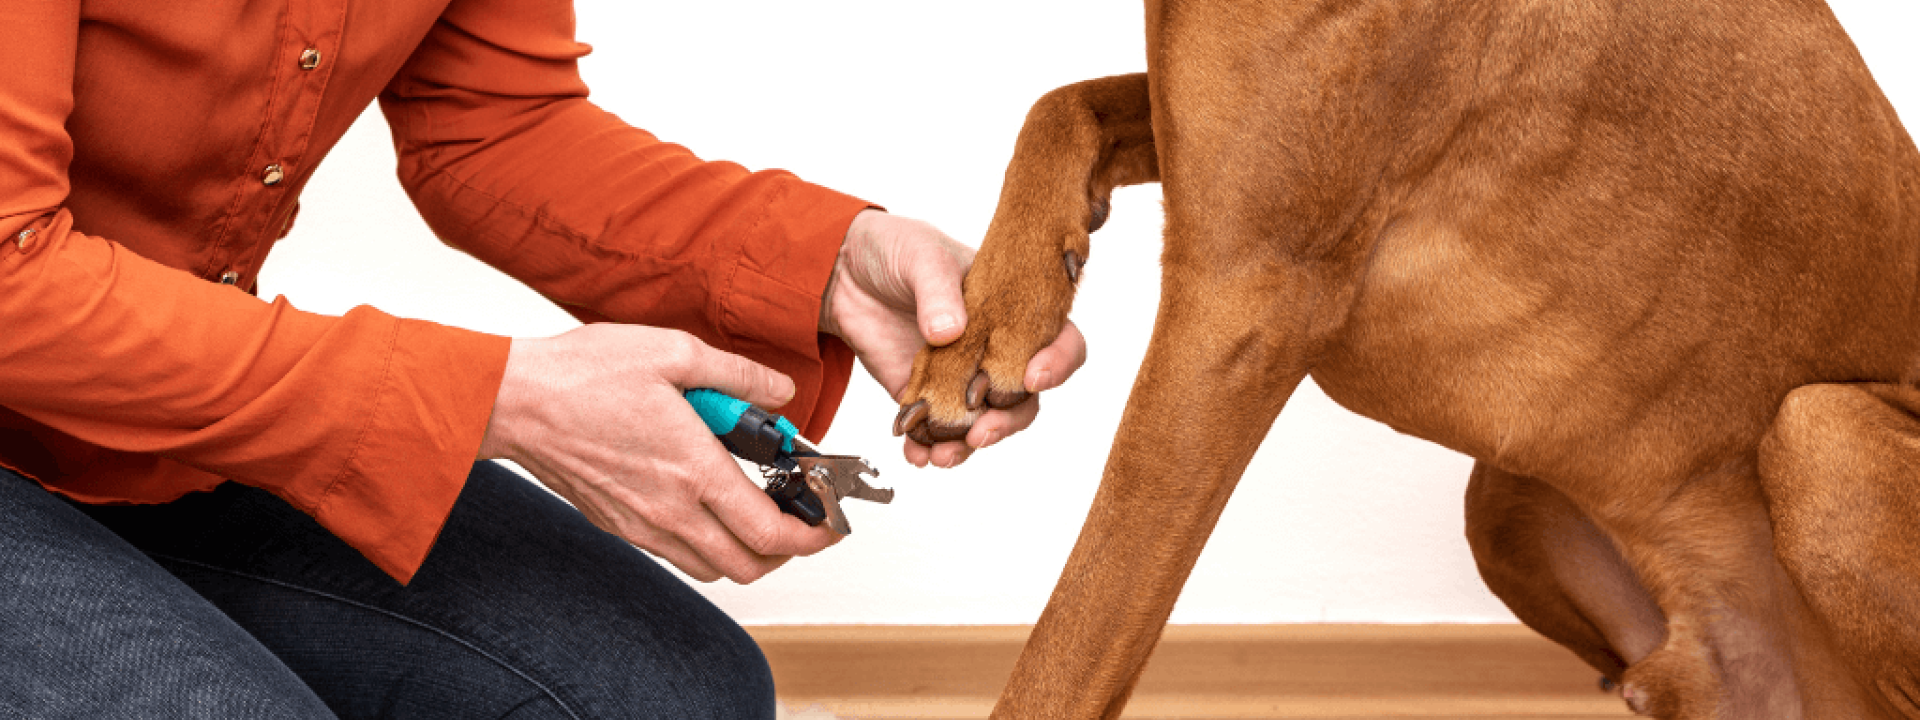 Dog nail clipping. Woman using nail clippers to shorten dogs nails.